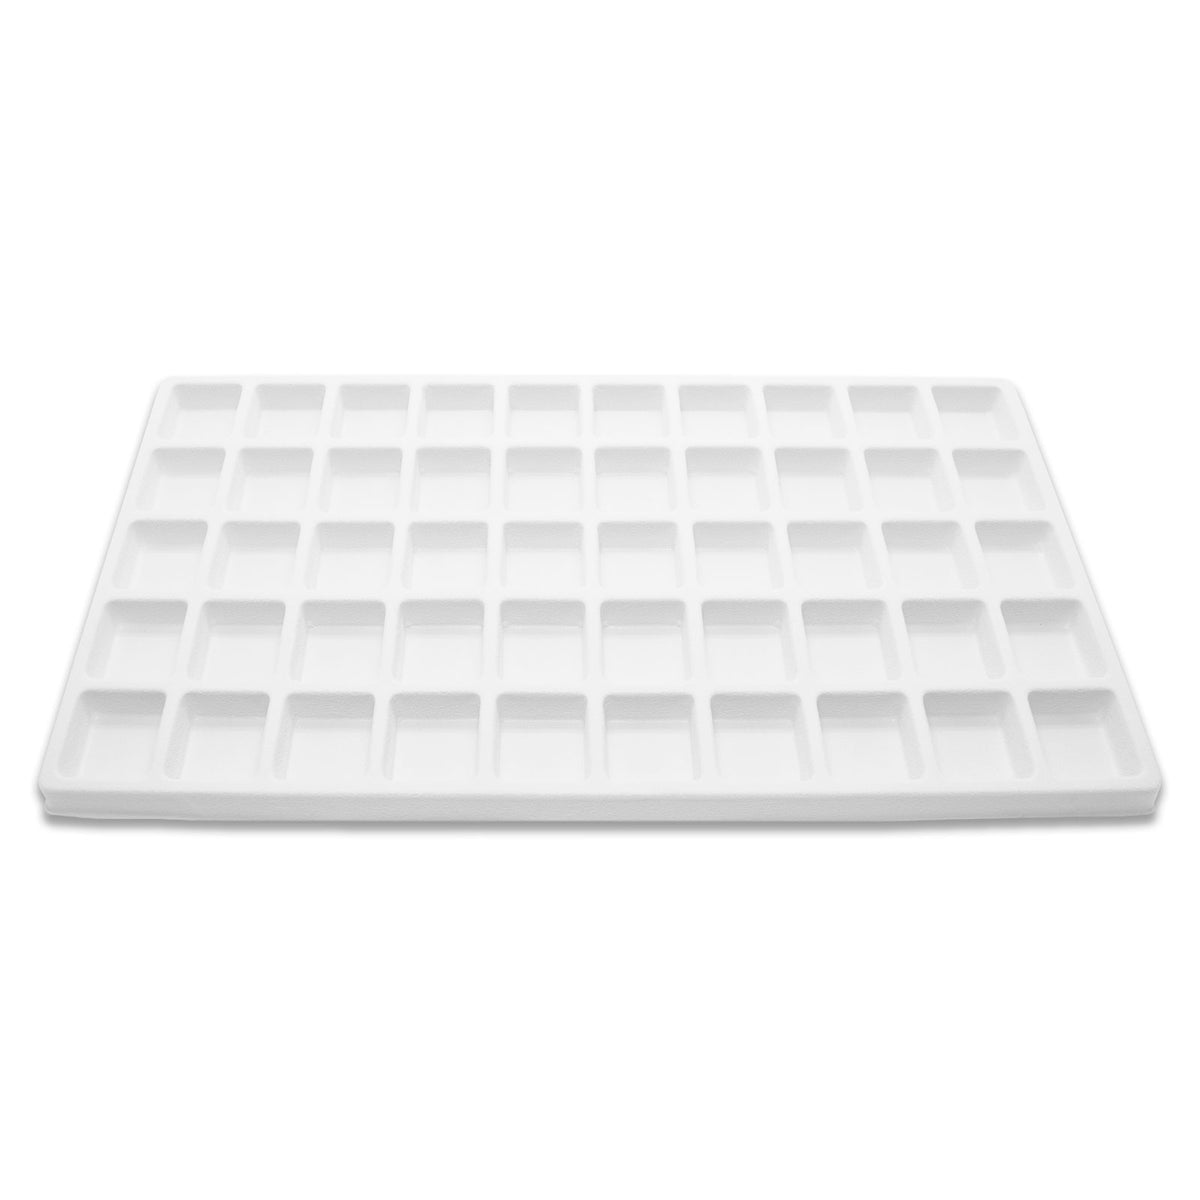 Plastic Compartment Tray Insert White 47x35cm (1000 Units)